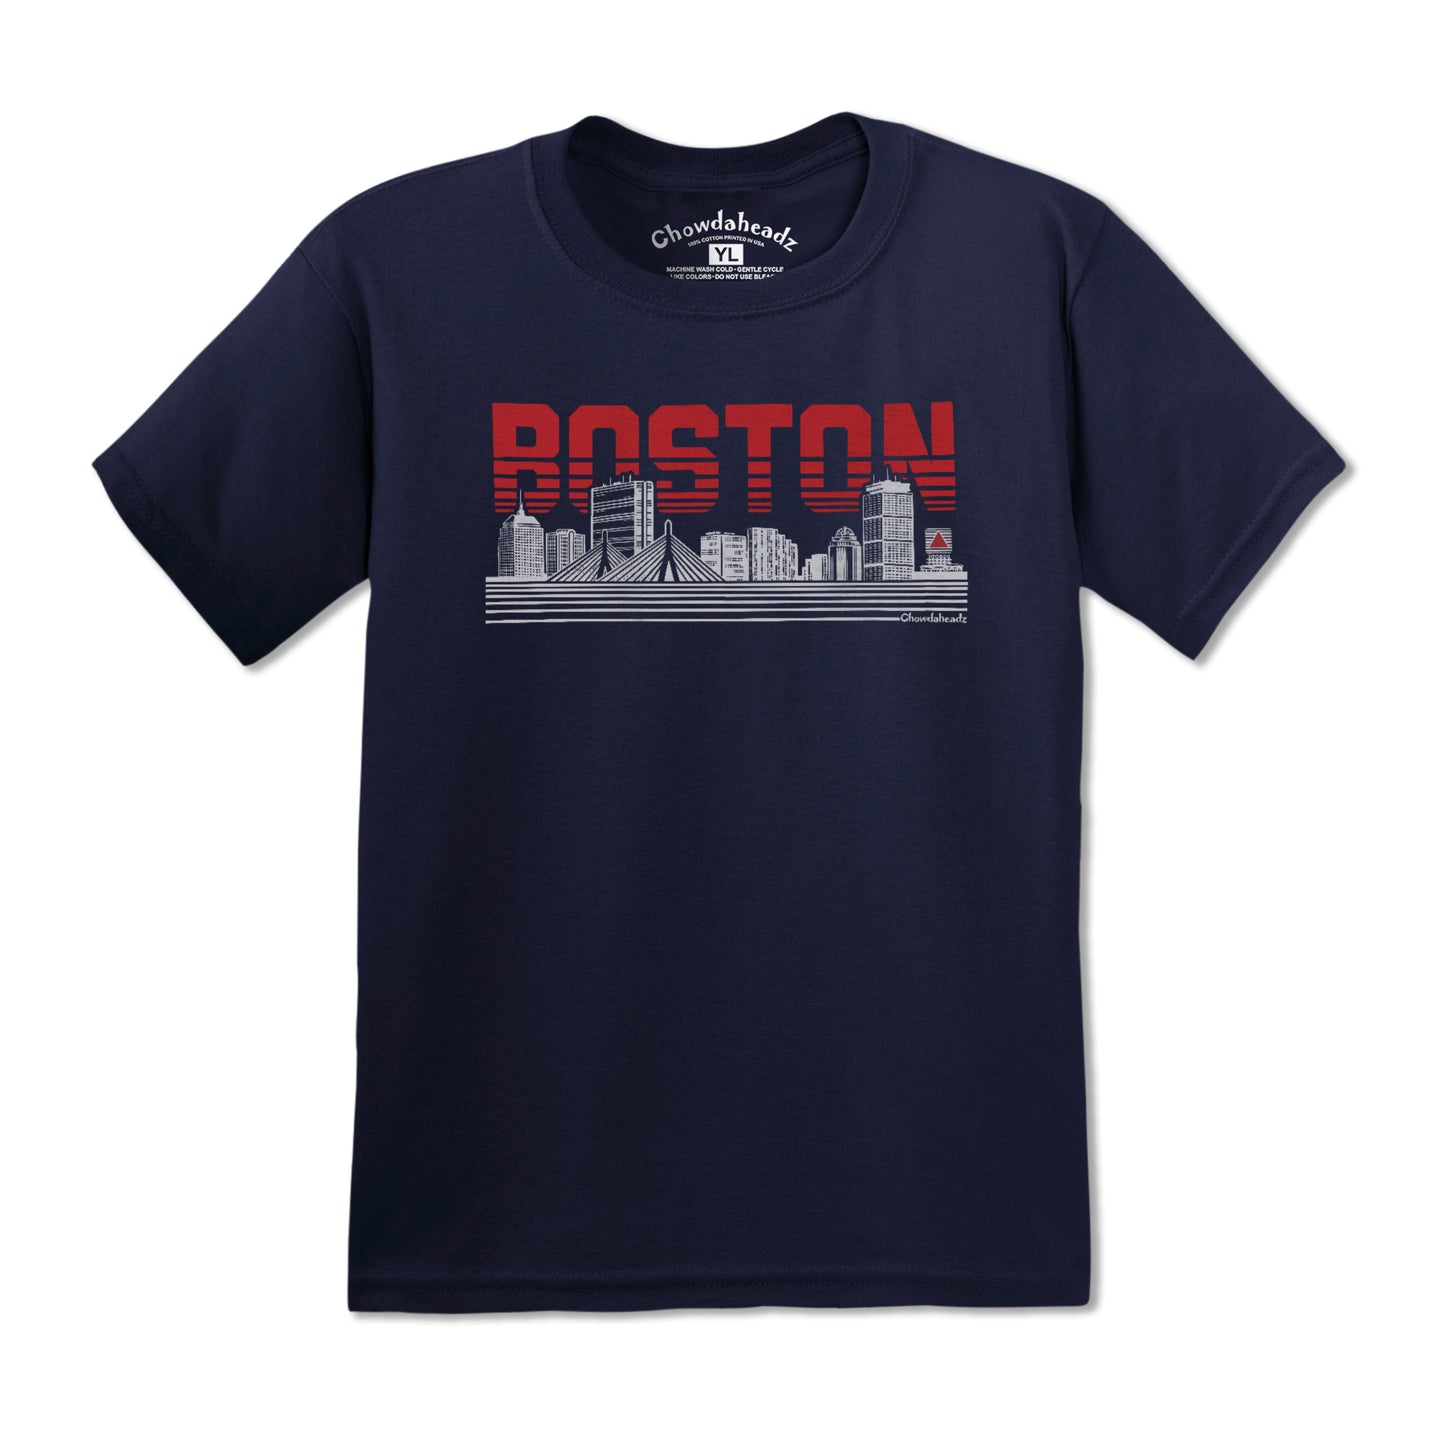 Boston Lined Cityscape Navy Youth T-Shirt - Chowdaheadz